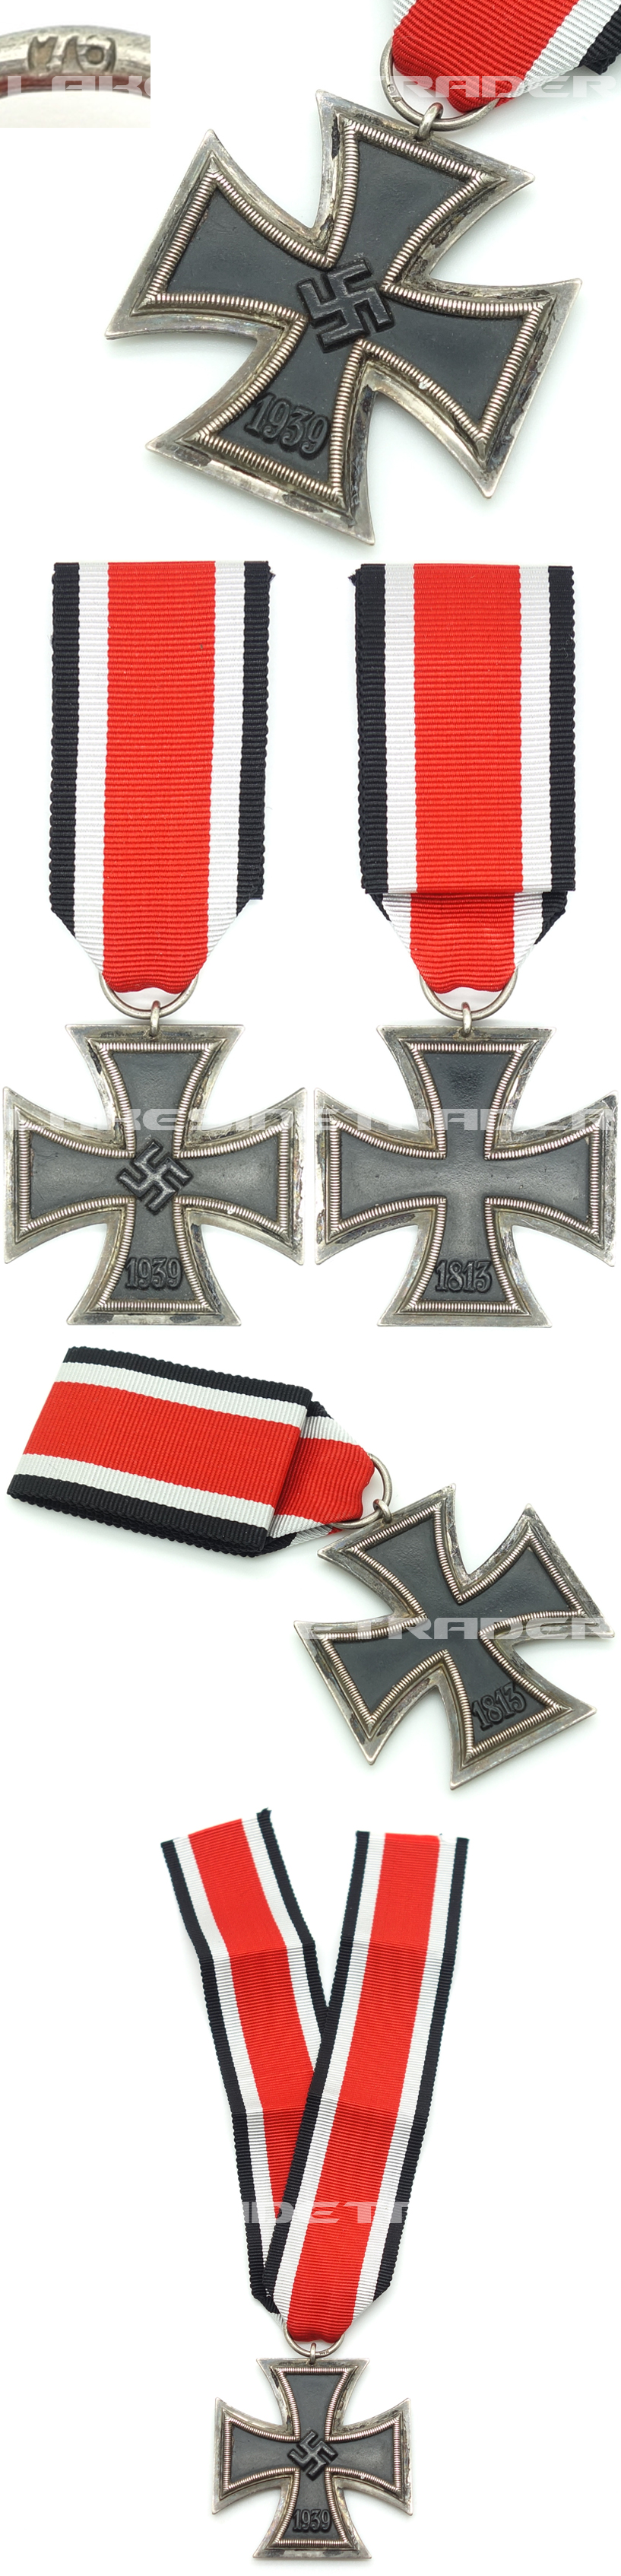 2nd Class Iron Cross by 76